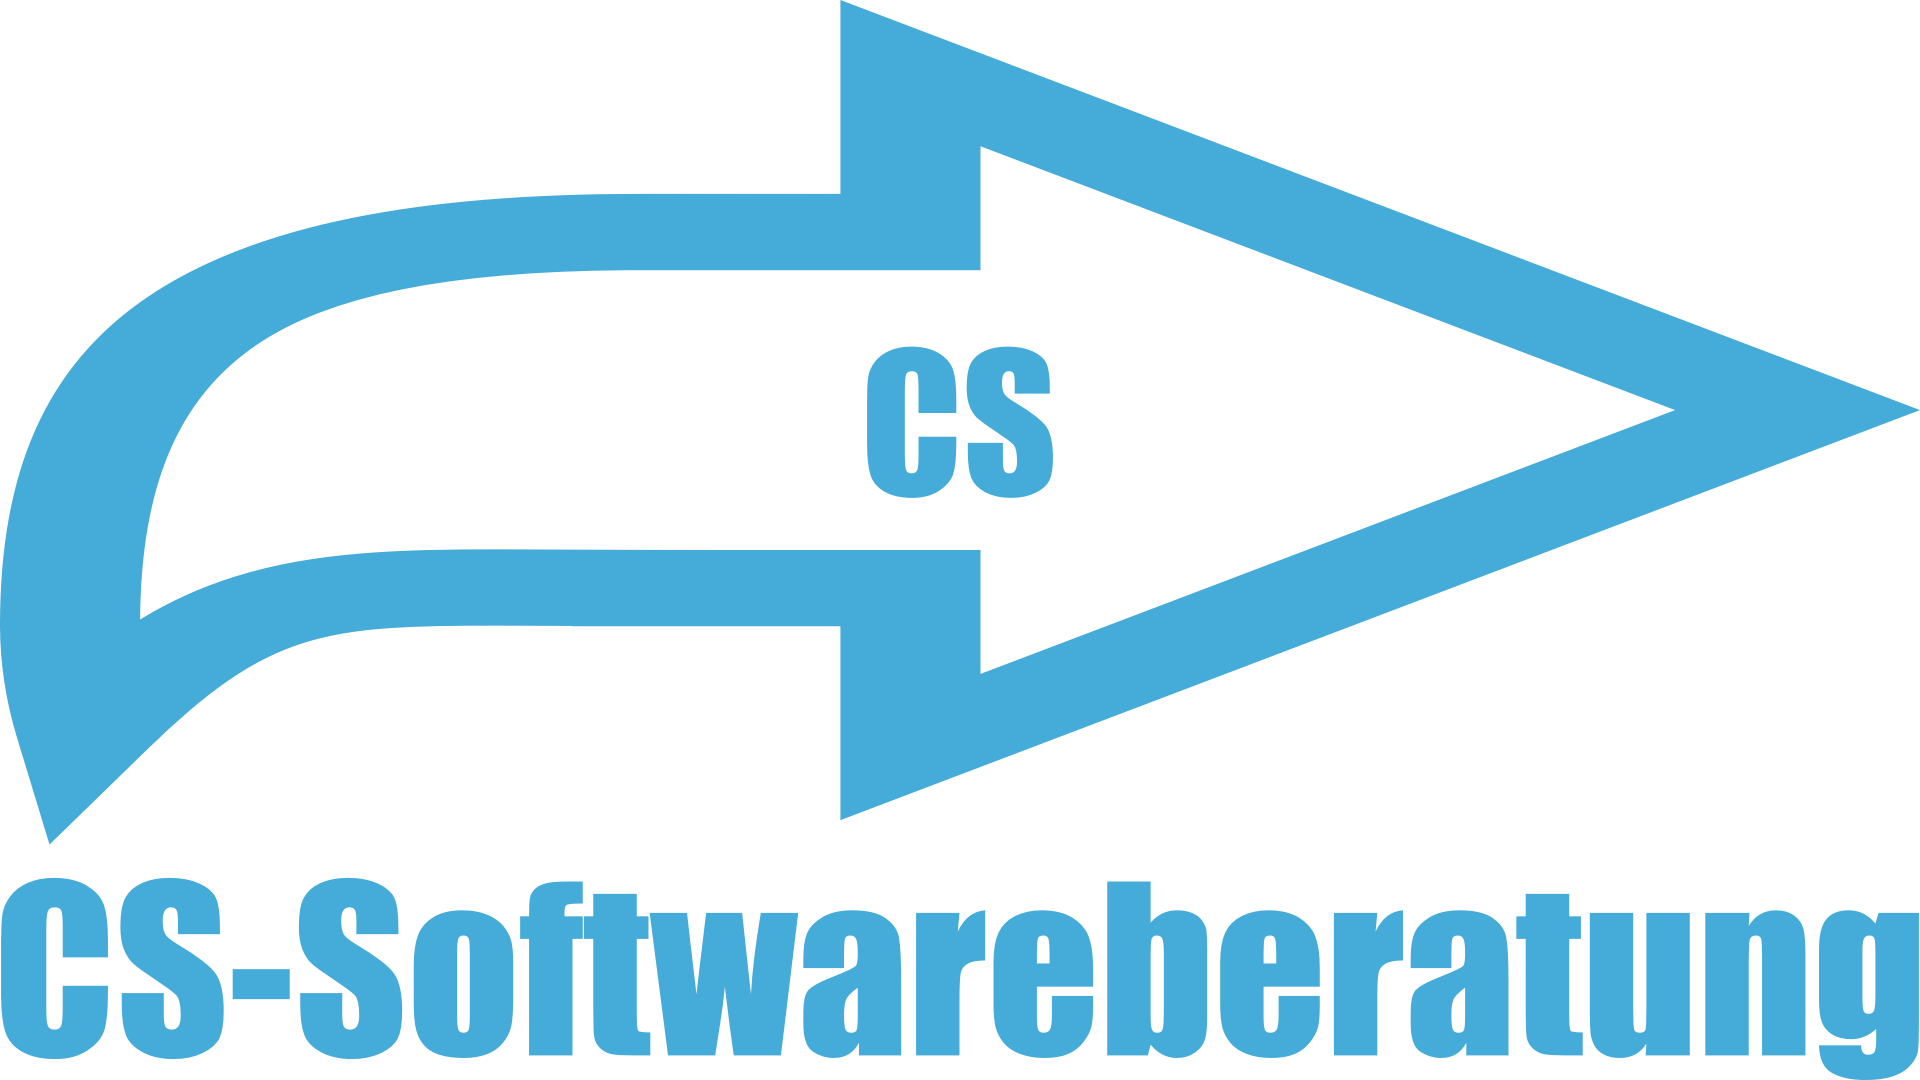 CS-Softwareberatung